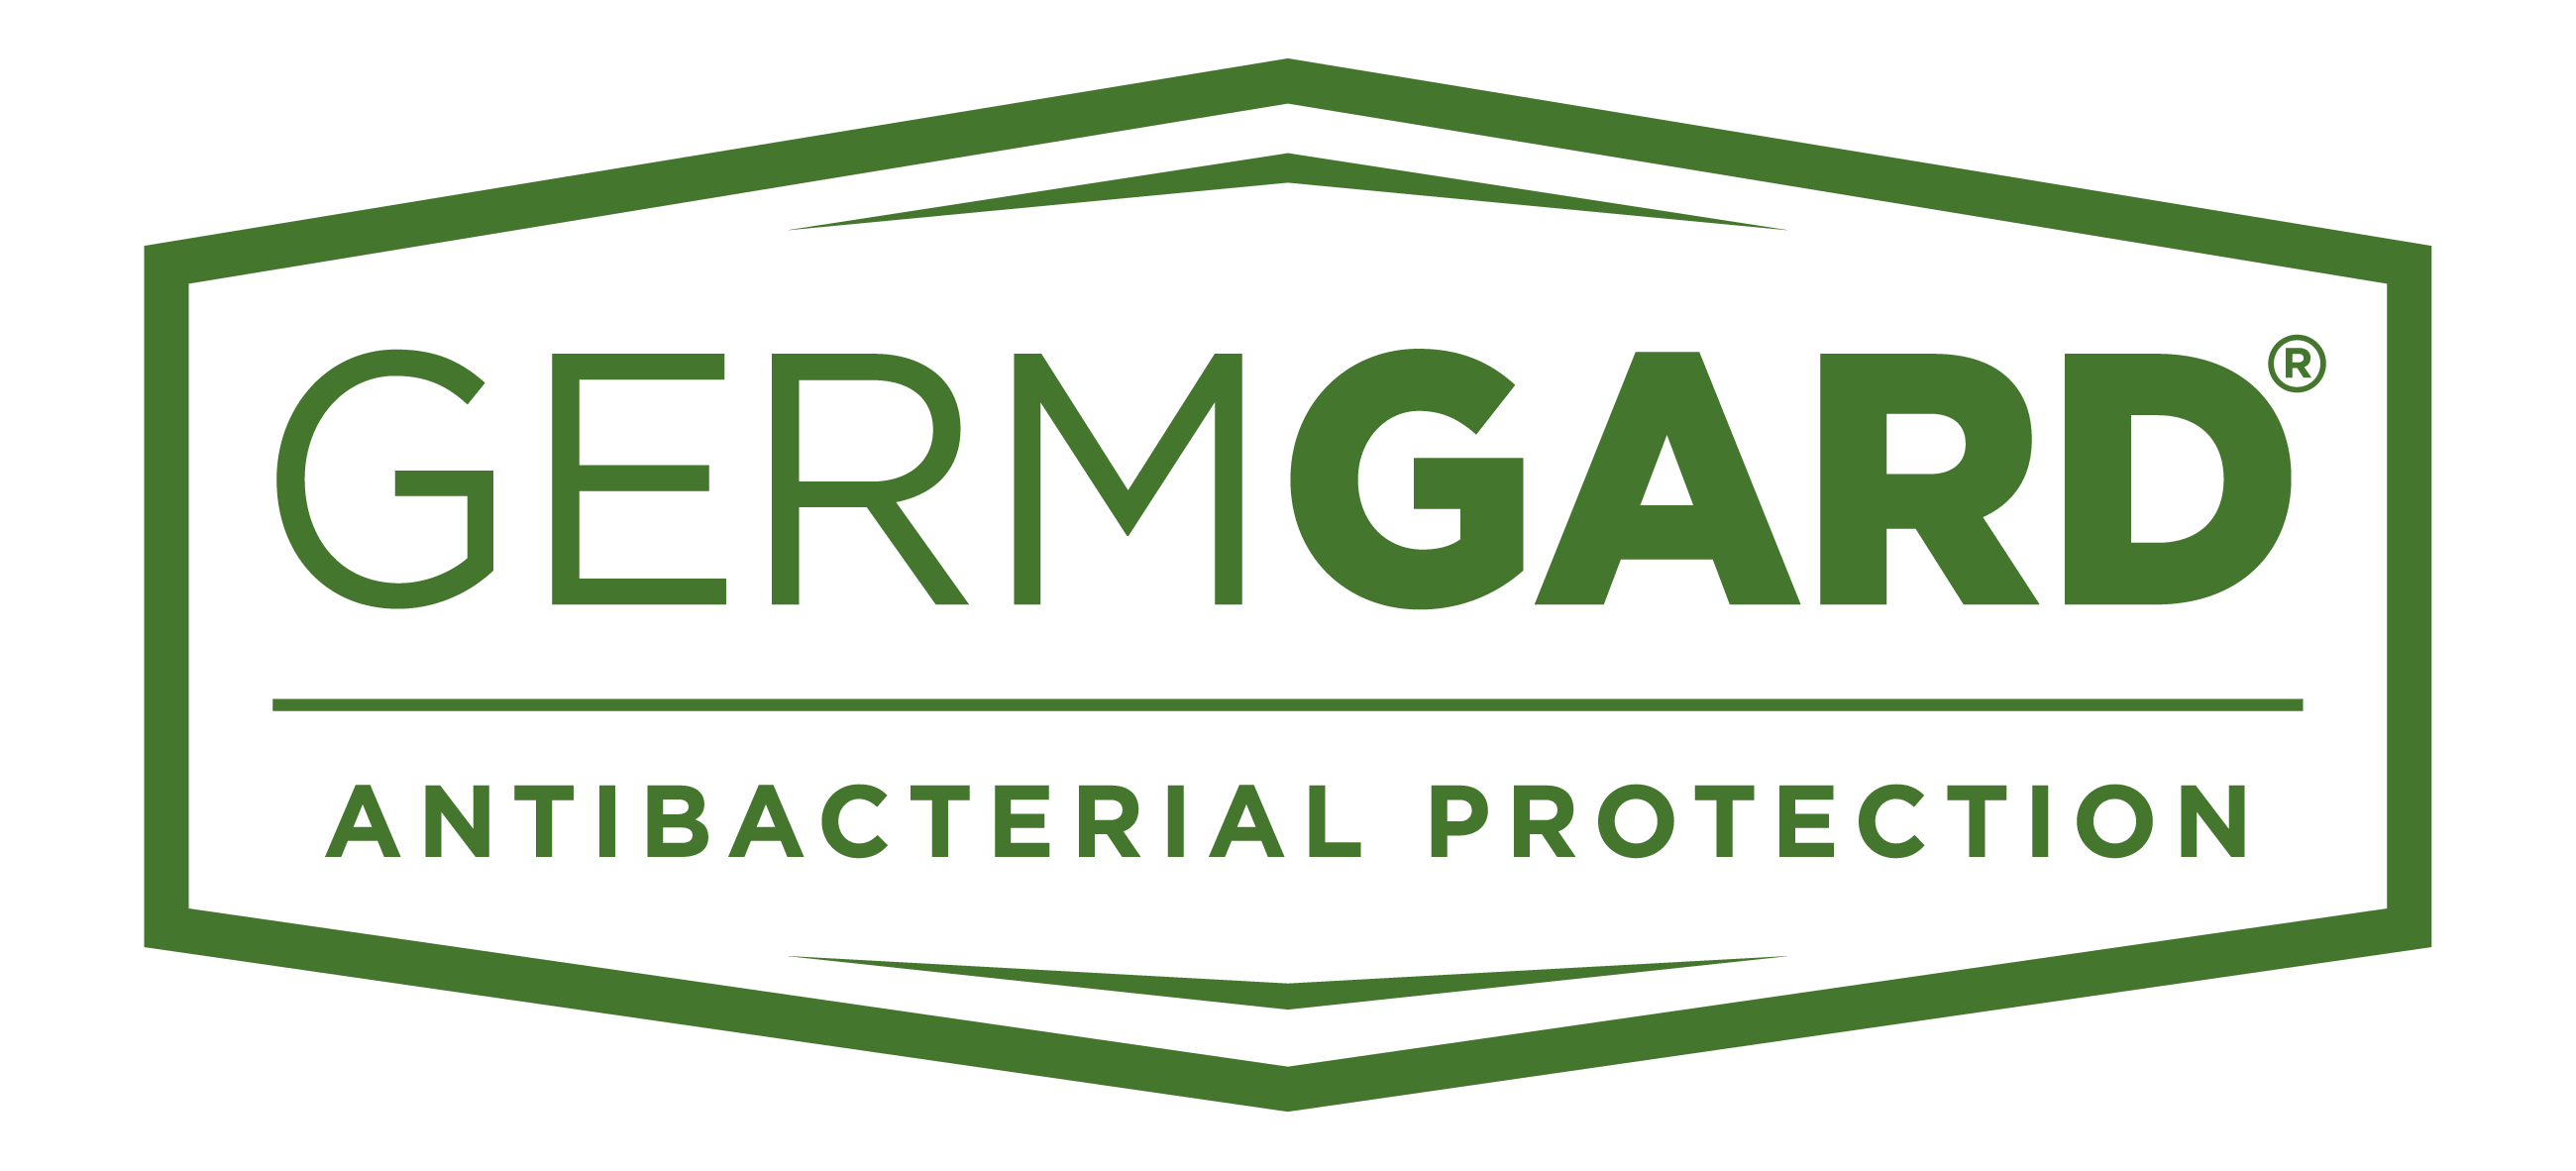 Germgard logo